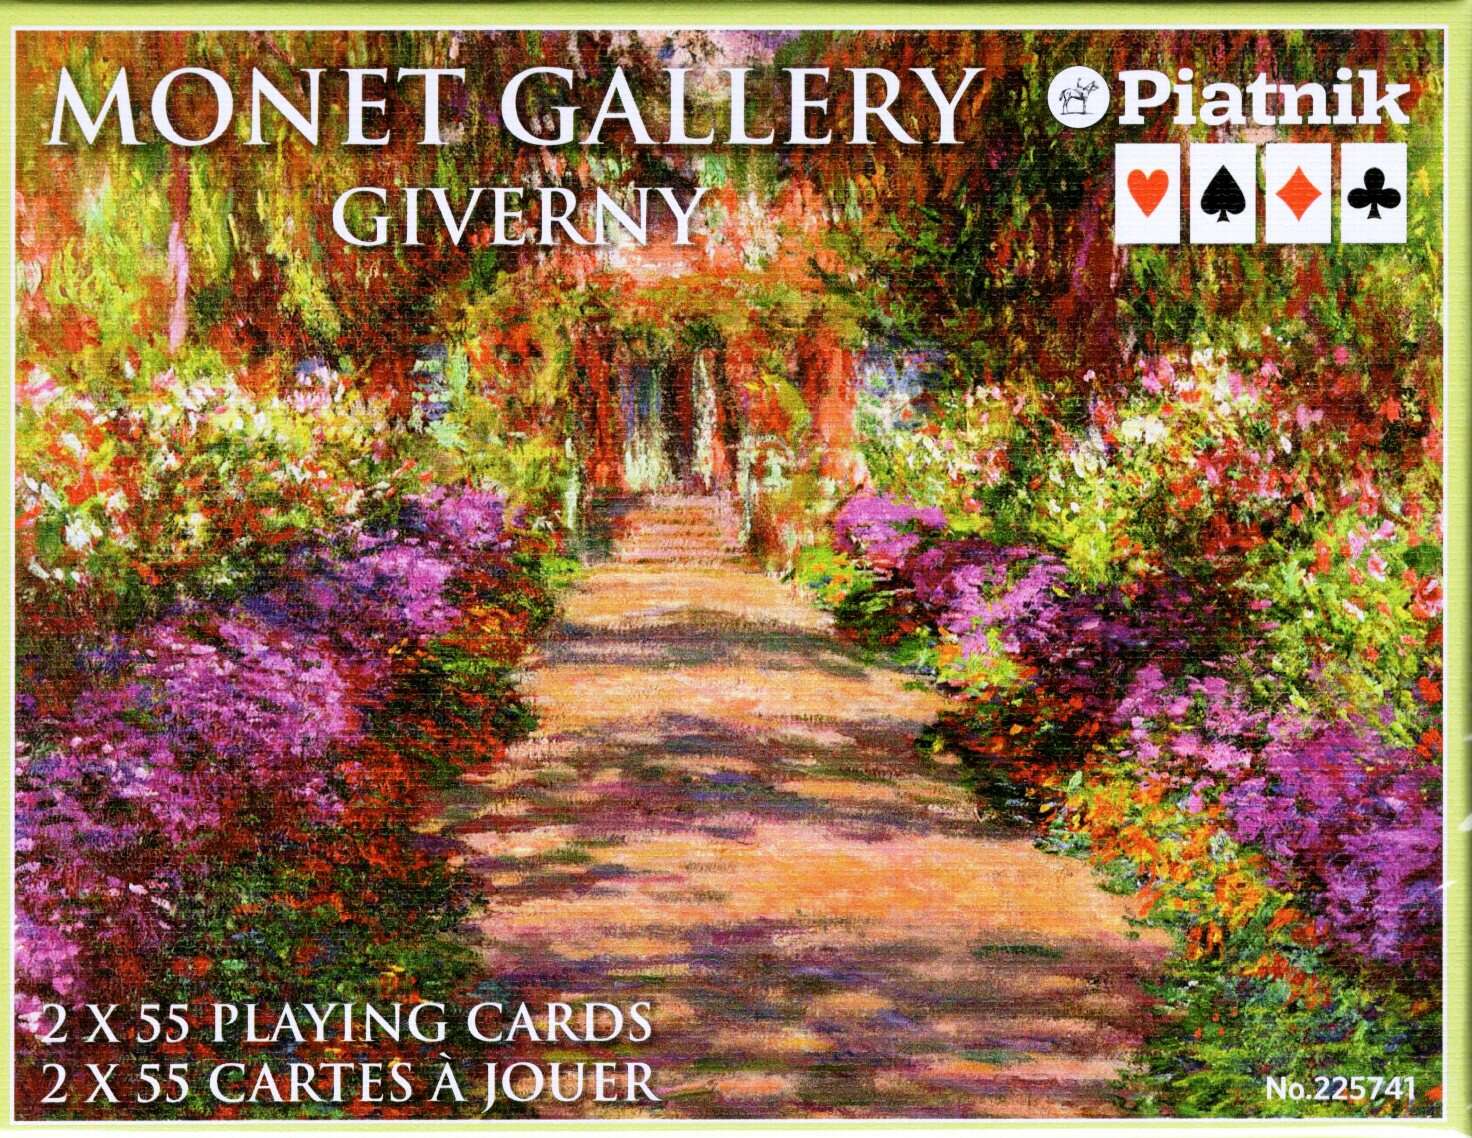 PlayingCardDecks.com-Monet Giverny 2 Deck Set Bridge Size Playing Cards Piatnik